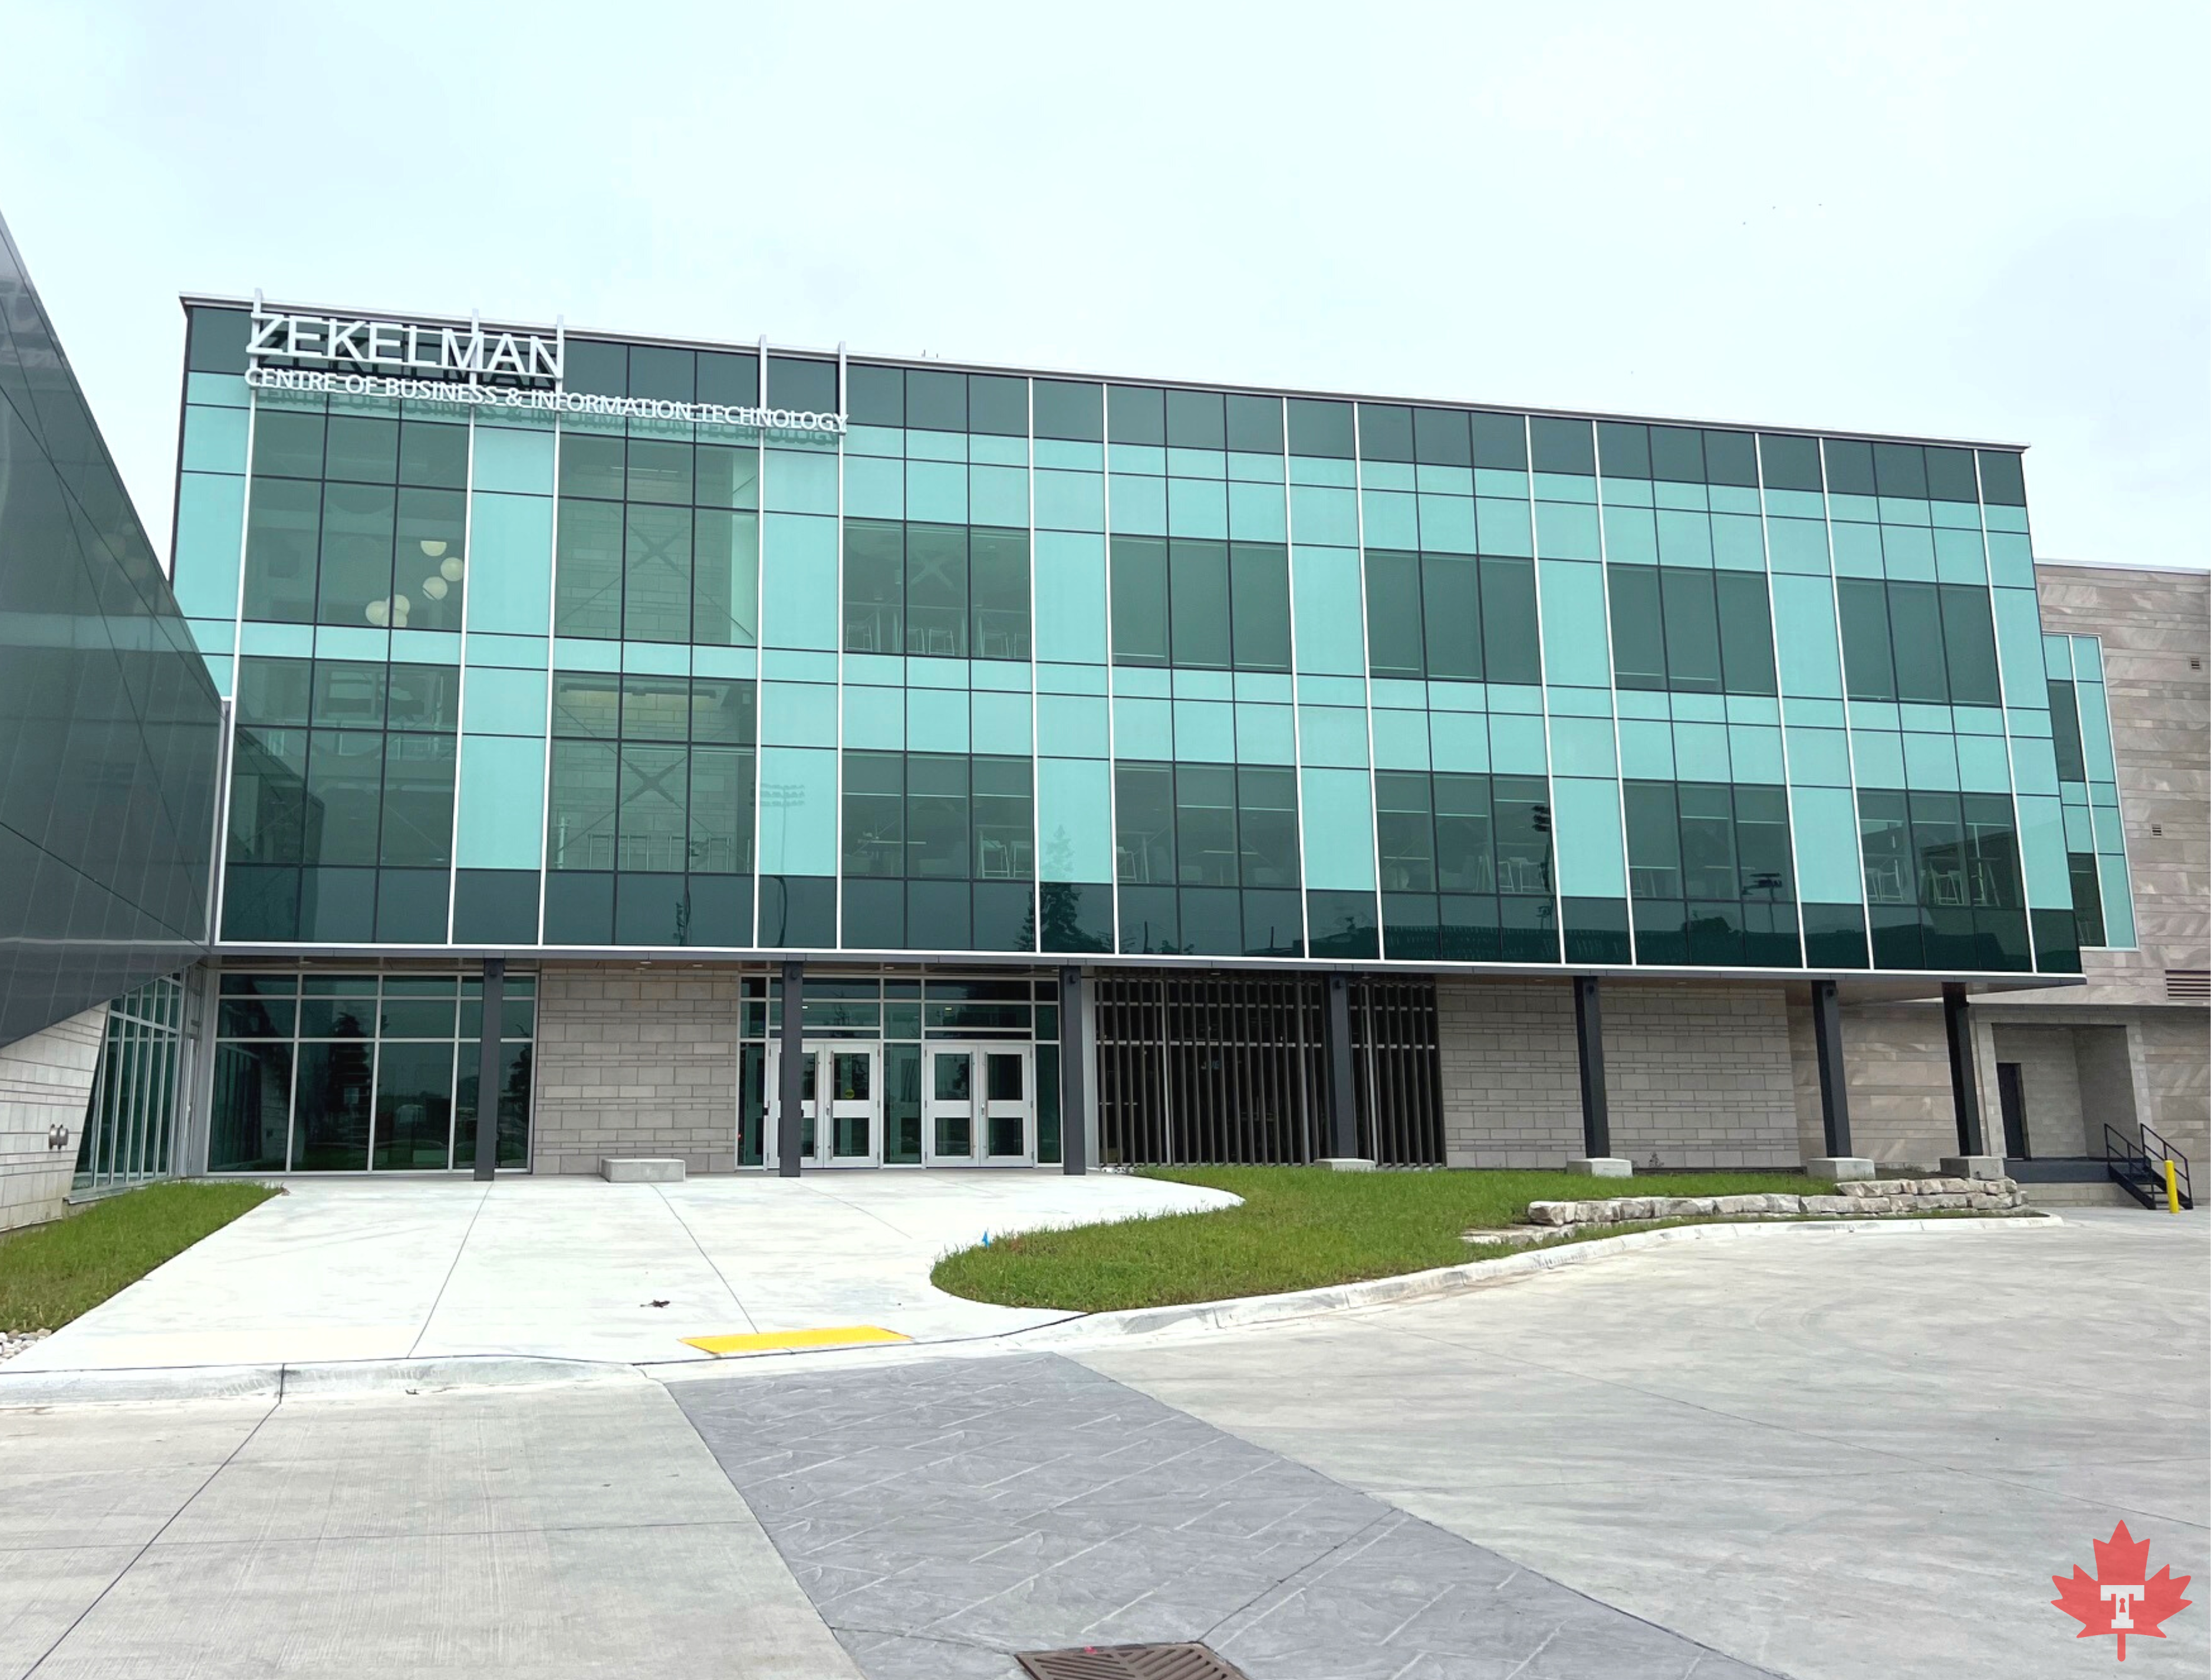 The Zekelman Centre for Business & Information Technology